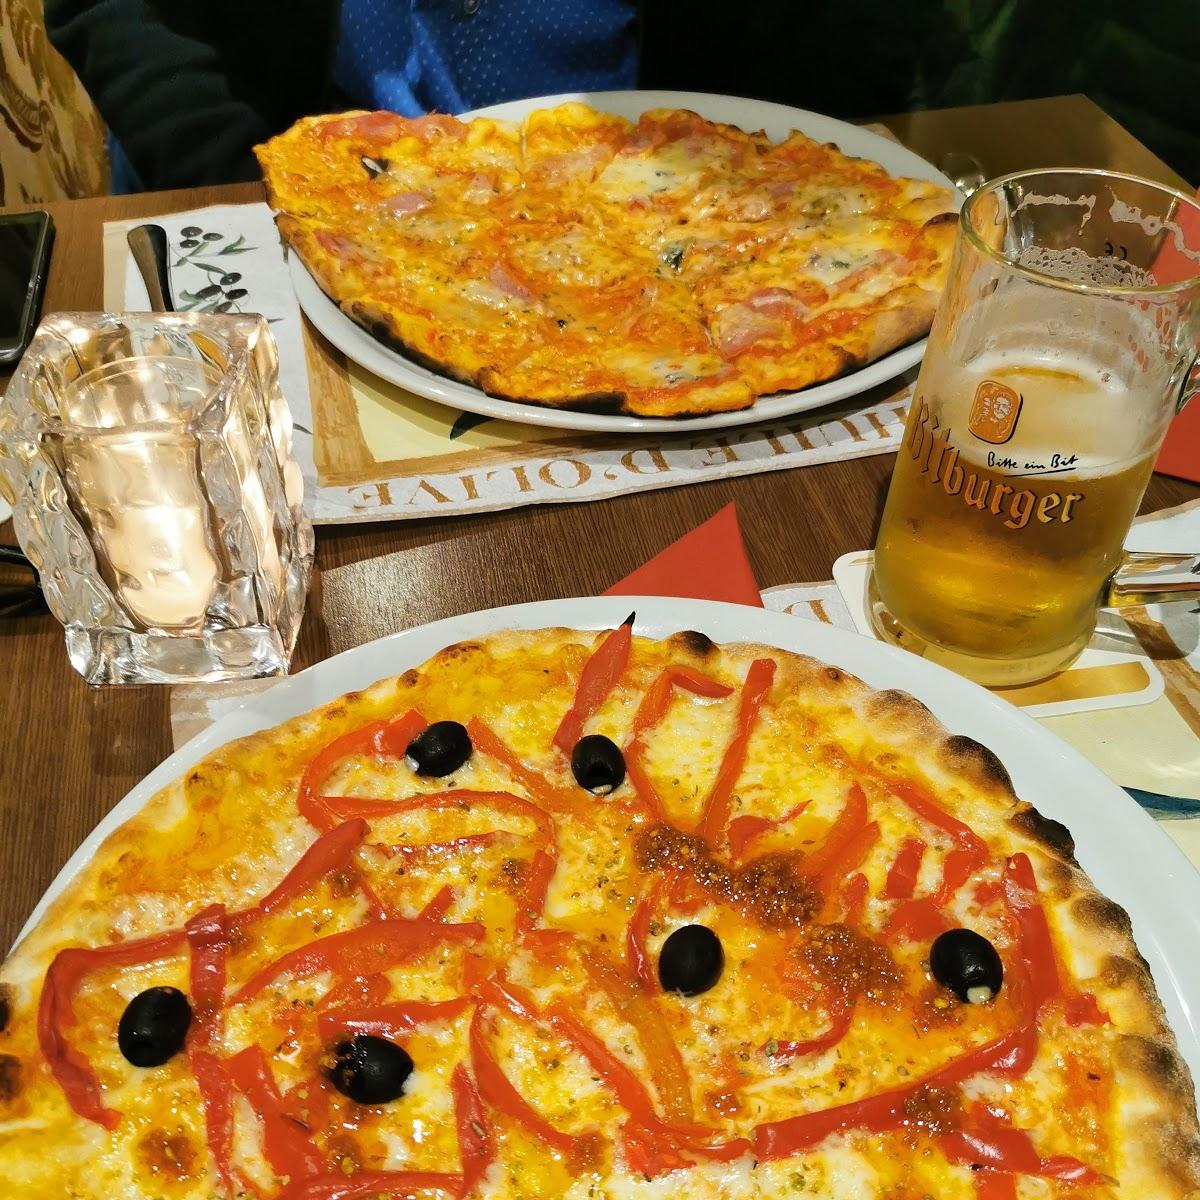 Restaurant "Pizzeria Am Elsabrunnen" in Kleve